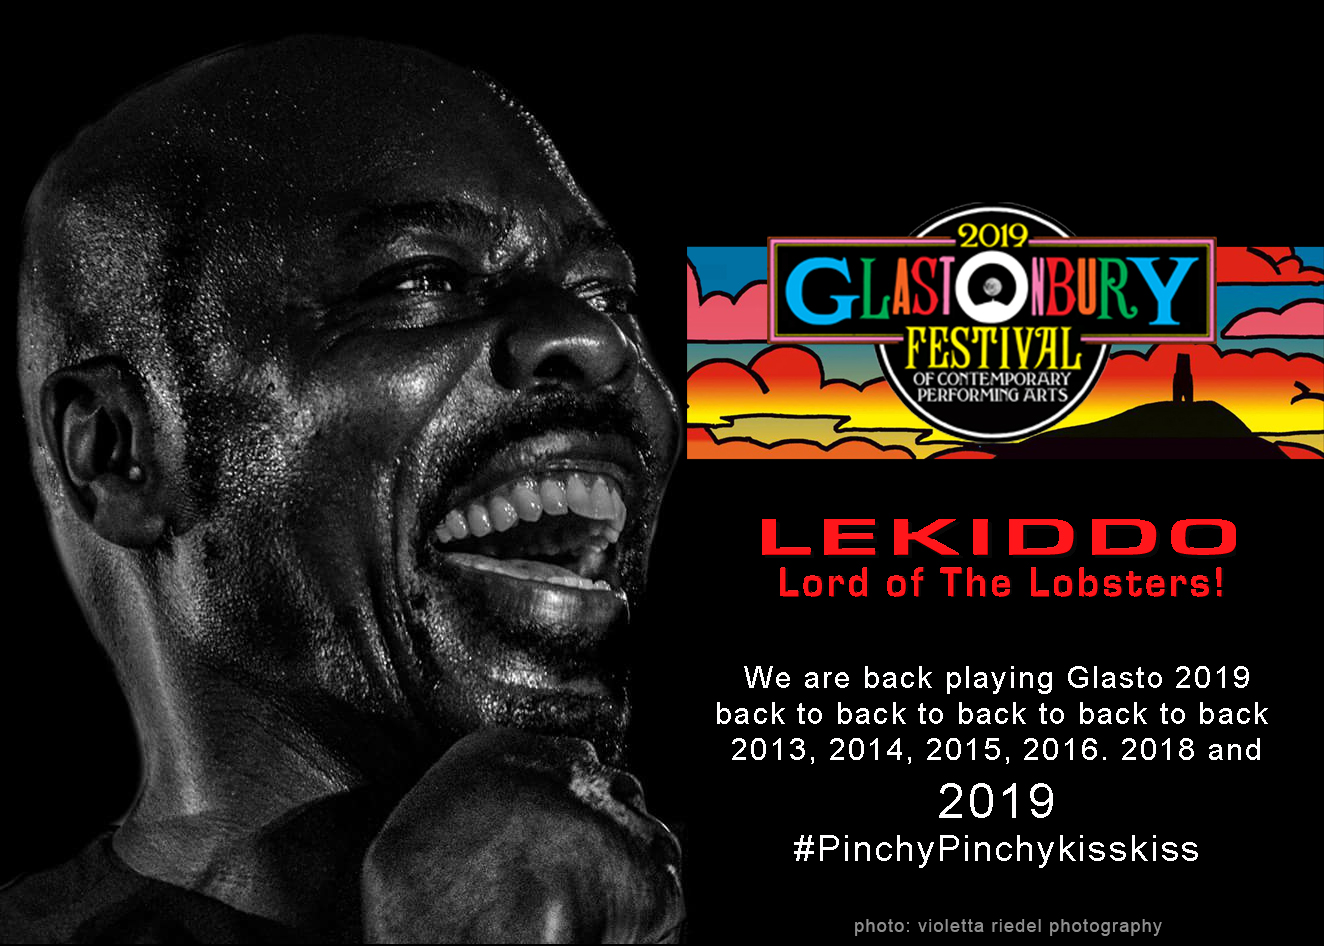 LEKIDDO - Lord of The Lobster! live at Glastonbury Festival (Official) 2019 @GlastoFest @lekiddo @glastotandc 5/5 stars #TheGuardian #GuardianMusic #Glastonbury2019 #GlastonburyFestival2019 #PinchyPinchykisskiss